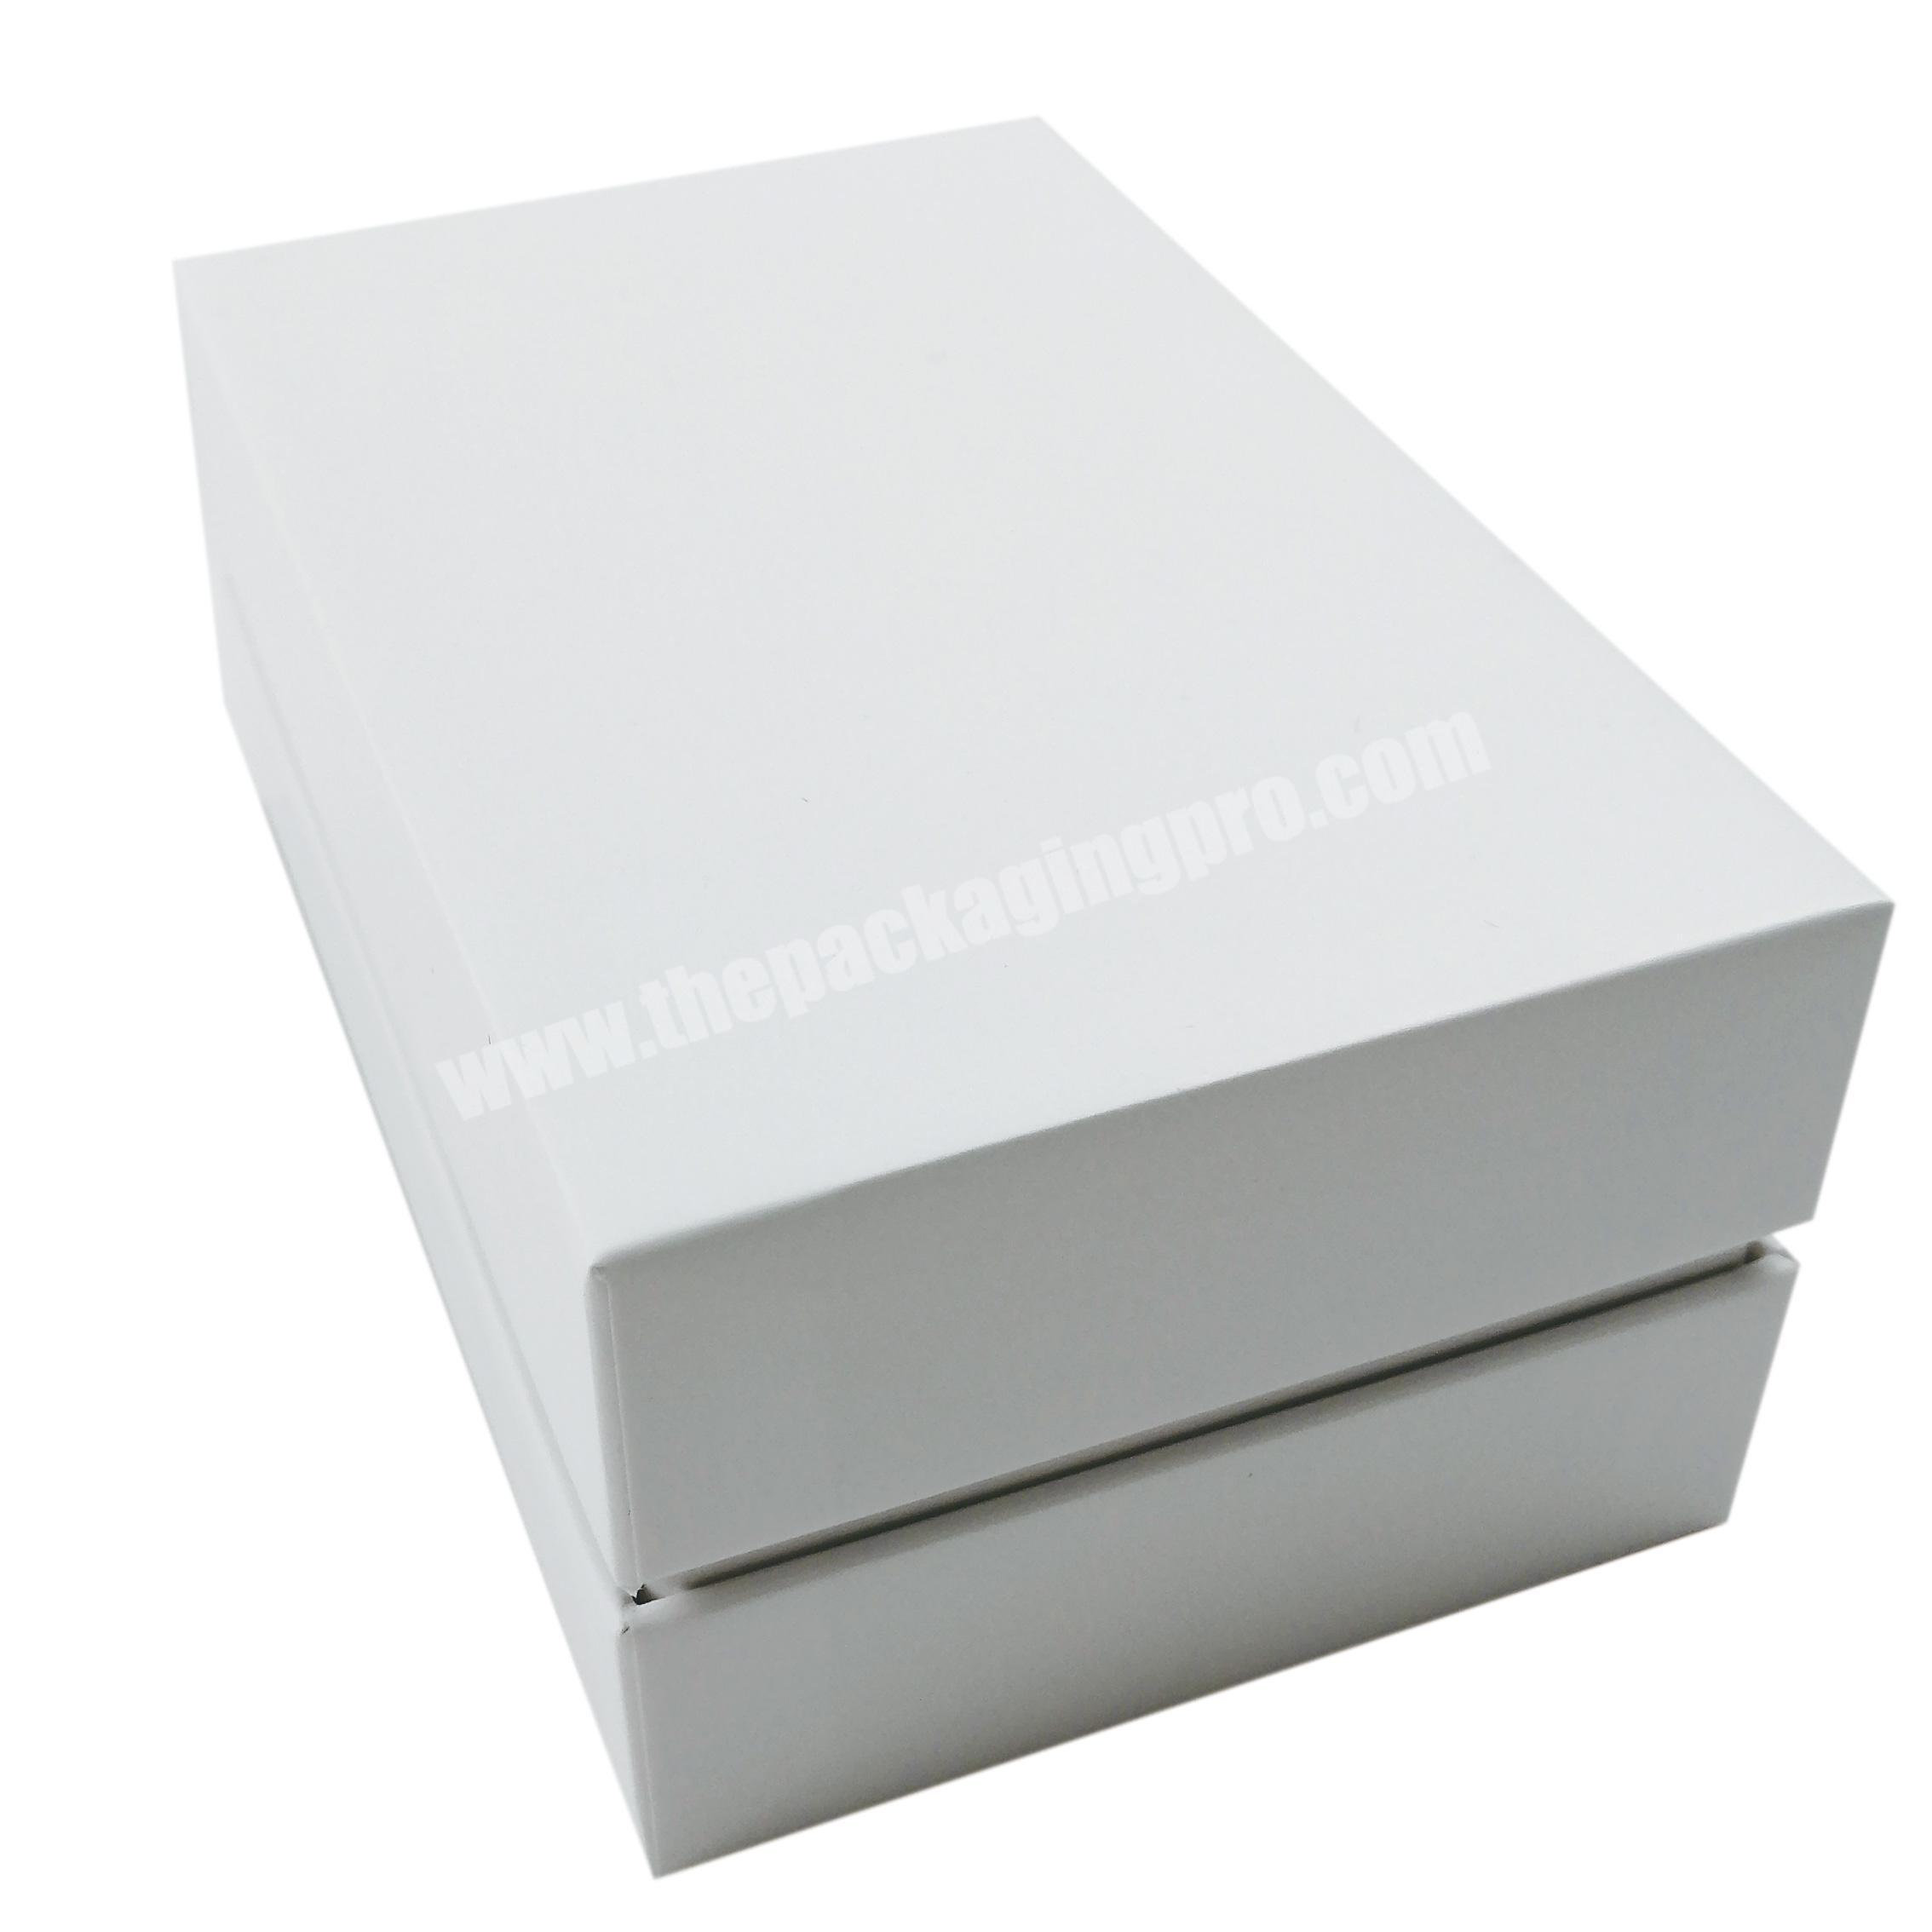 Straight Edges Custom Cardboard Packaging Box With Tough White EVA Tray